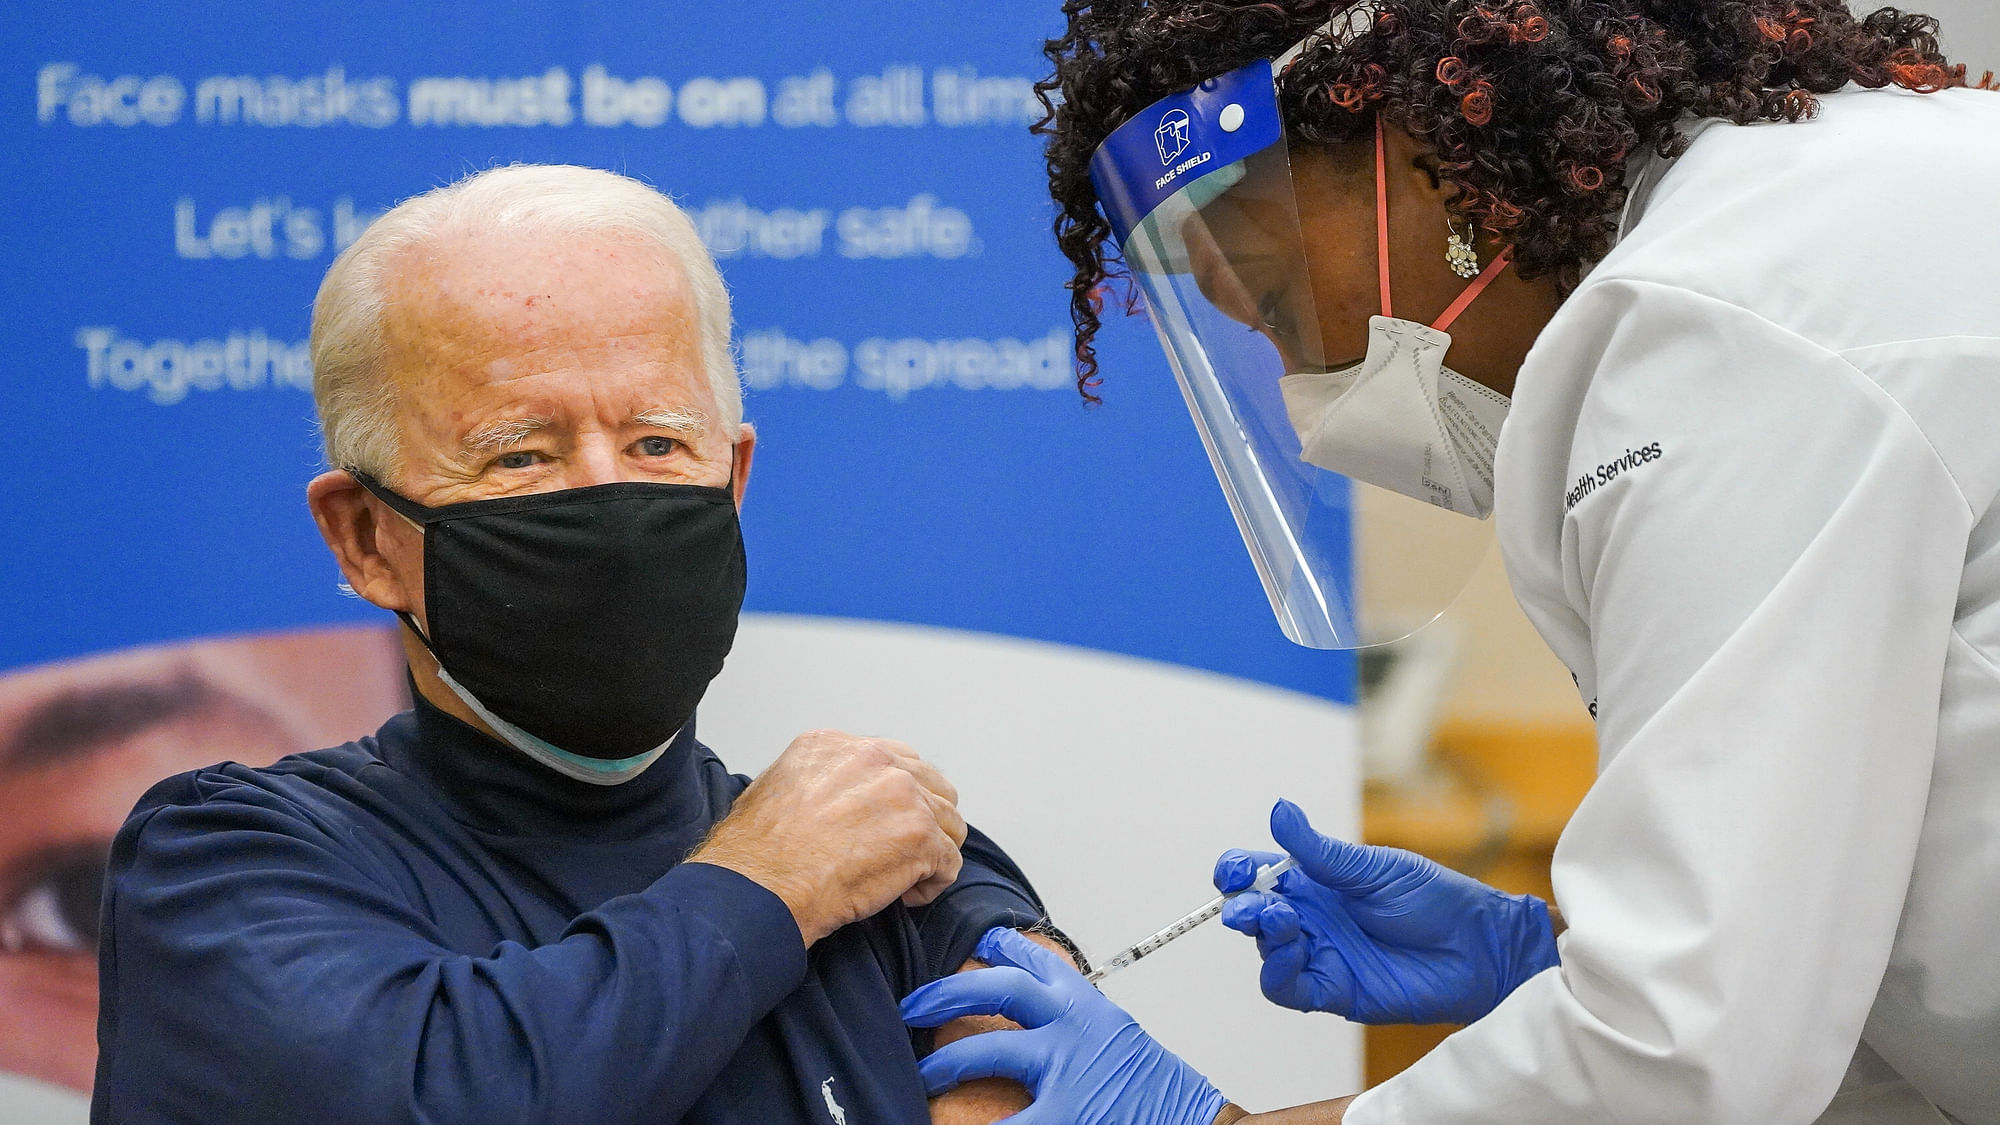 US President Joe Biden receiving the Pfizer vaccine